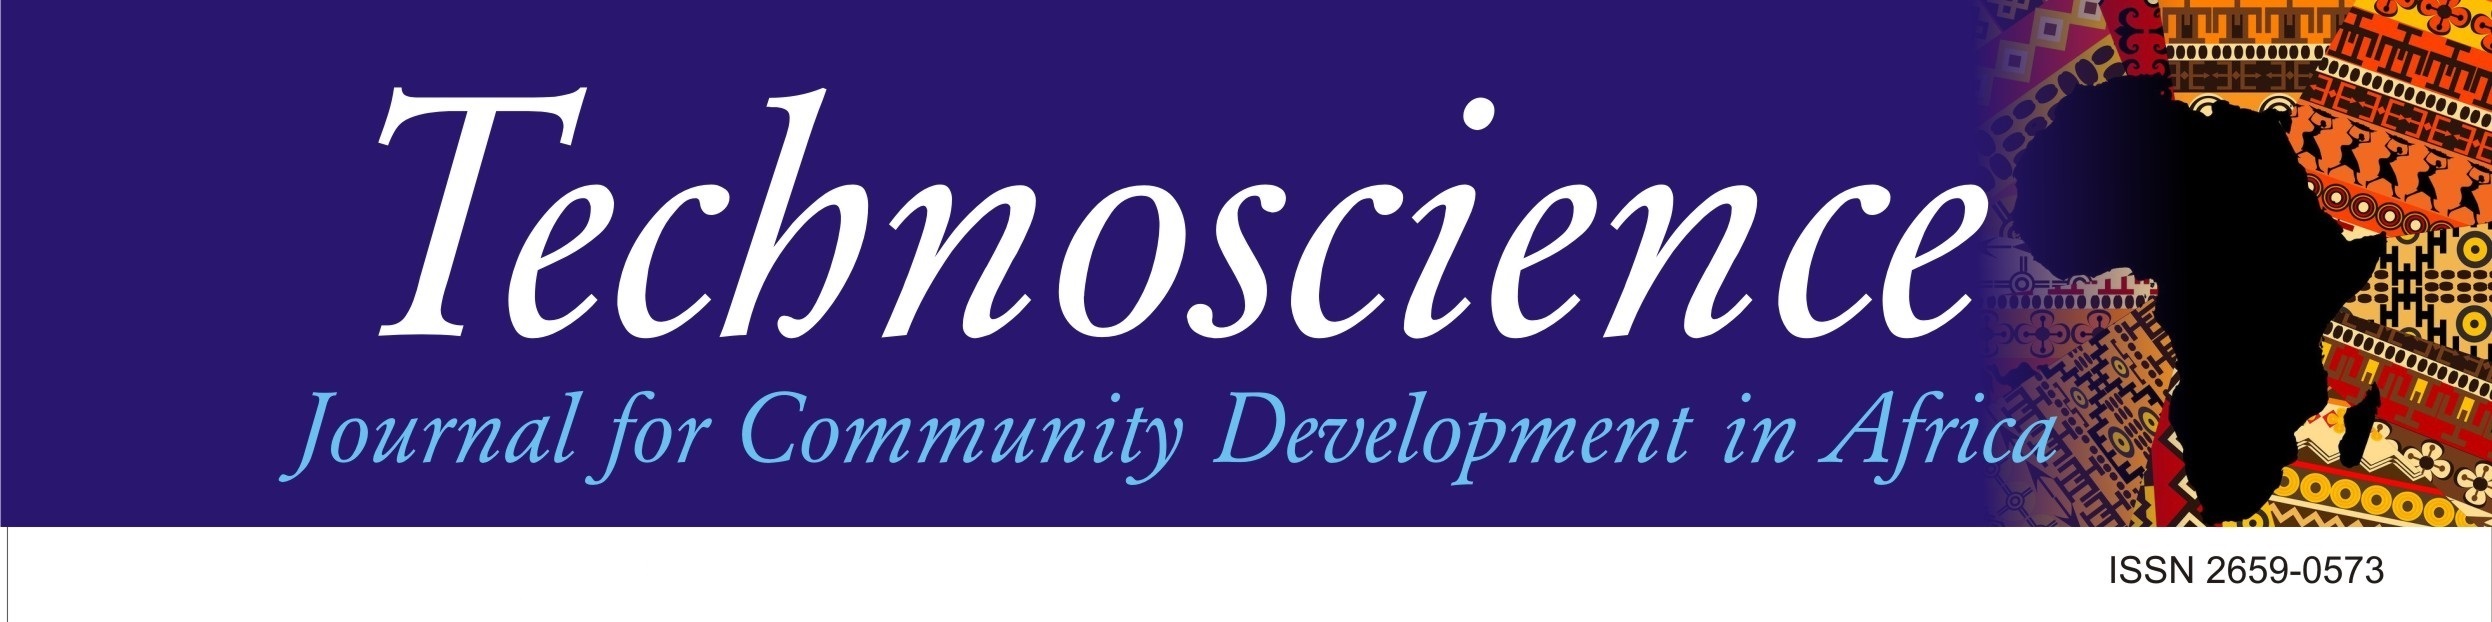 Technoscience Journal for Community Development in Africa